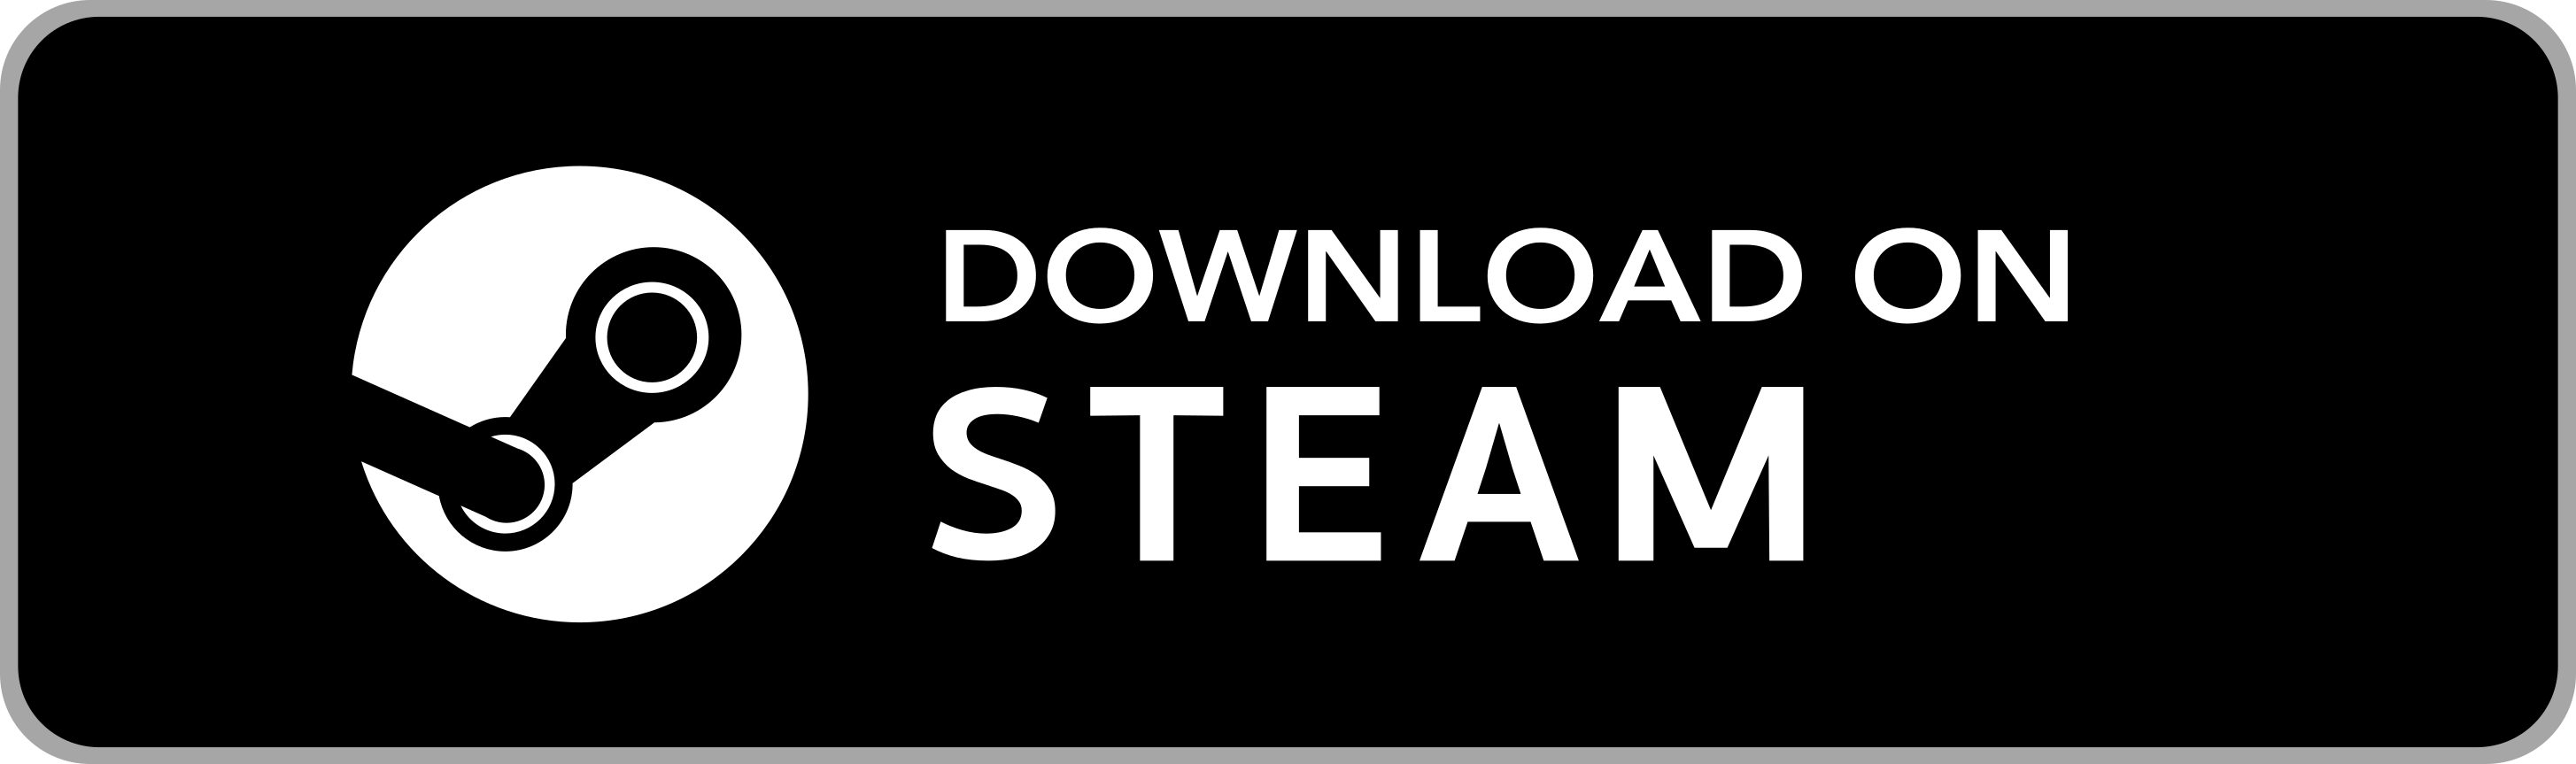 download on steam